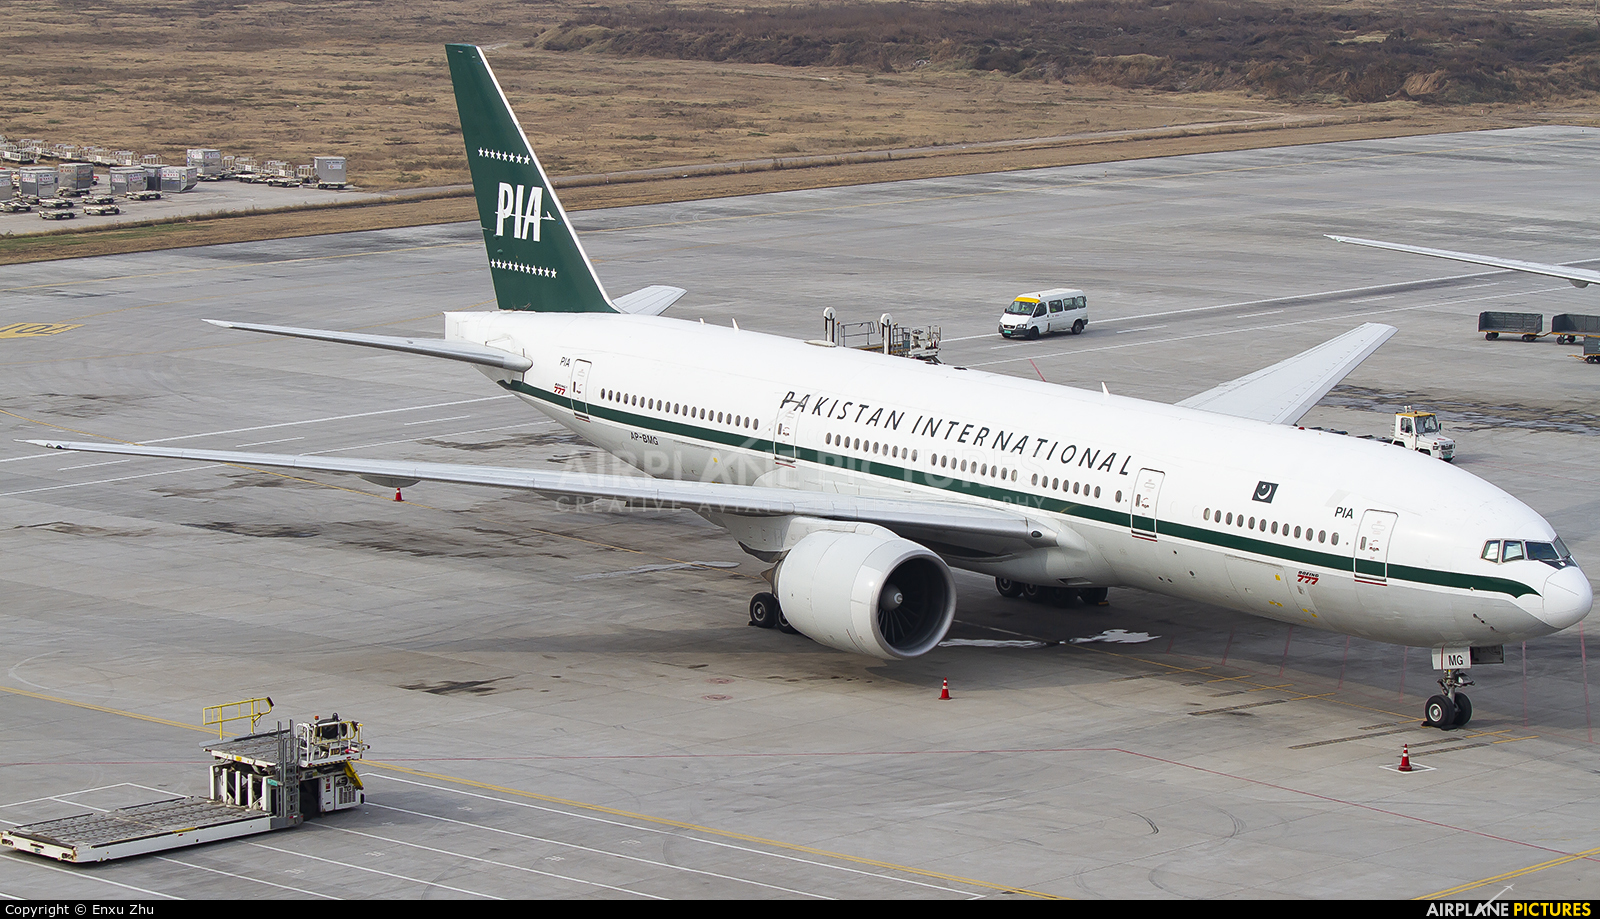 PIA - Pakistan International Airlines AP-BMG aircraft at Xi'an Xianyang International